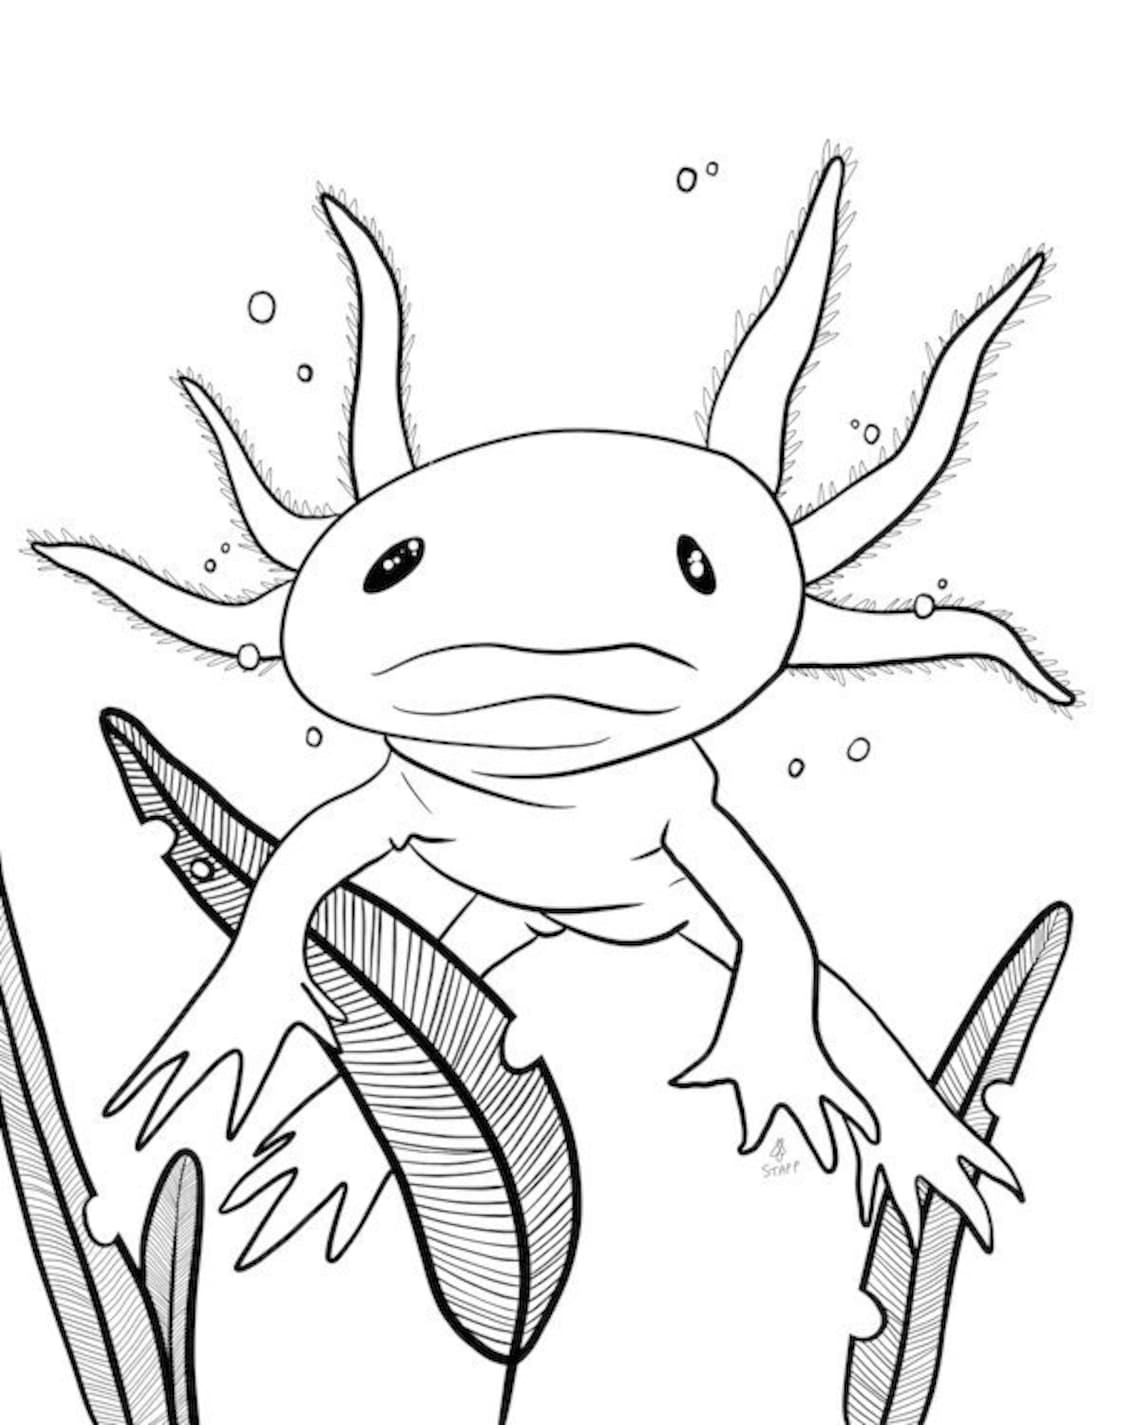 Axolotl Coloring Pages to Print - Axolotl Coloring Pages Free